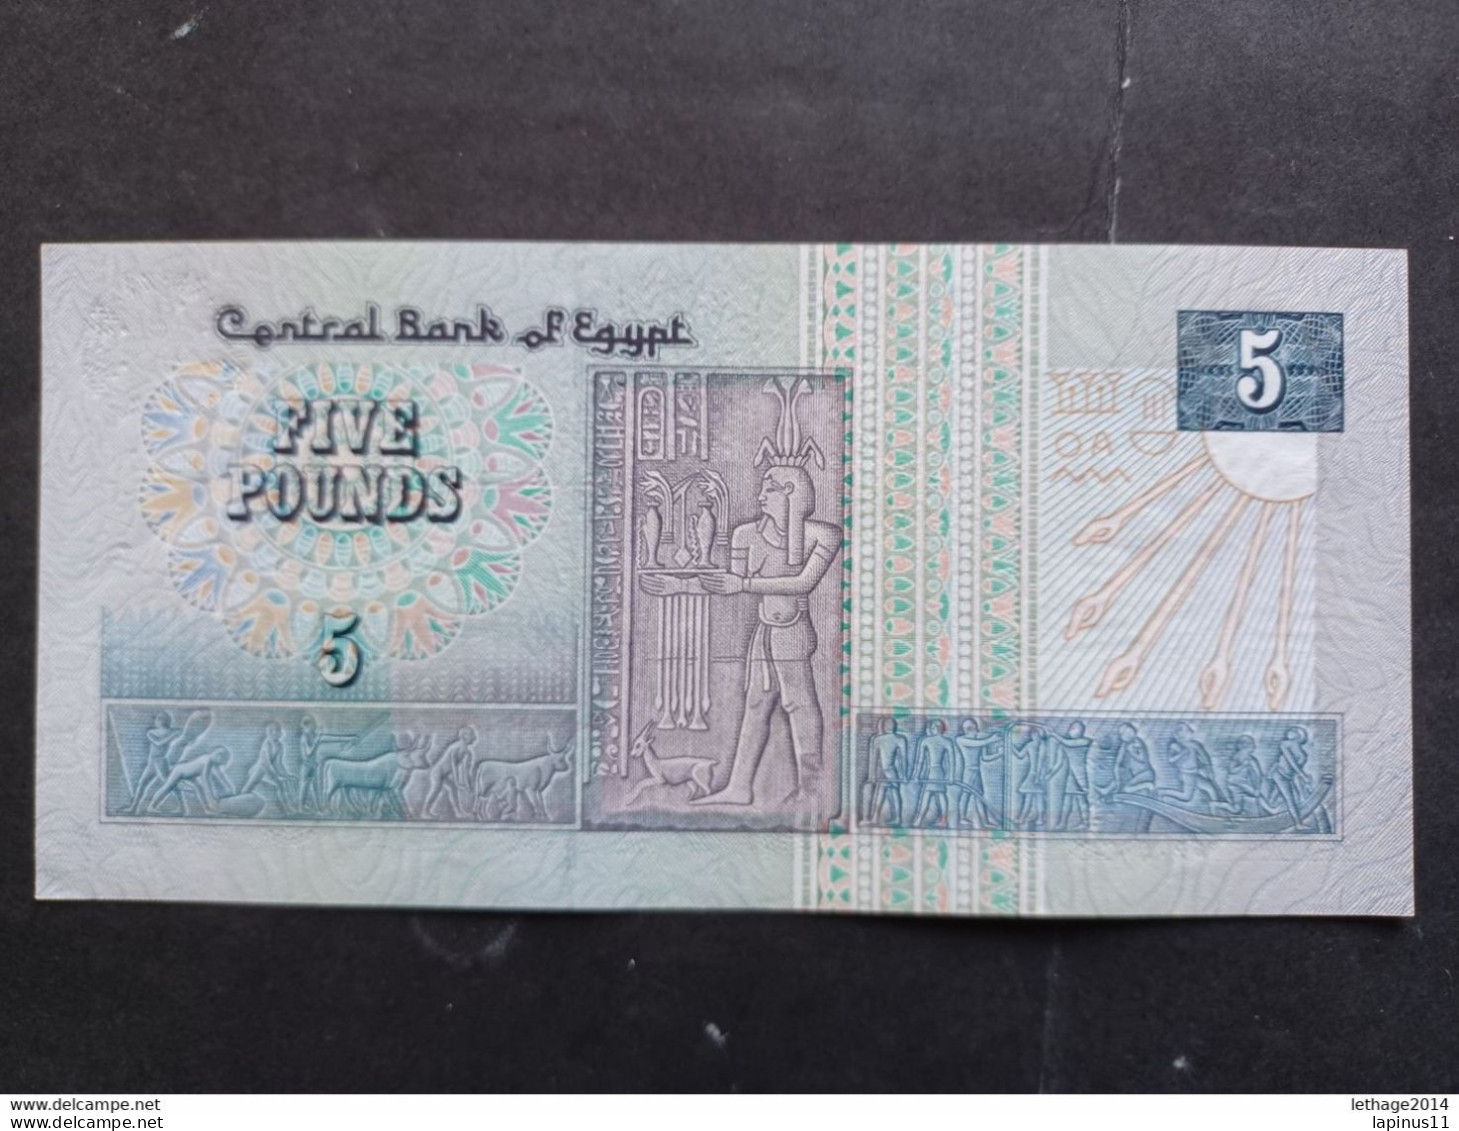 BANKNOTE EGYPT EGYPT 5 POUNDS 1993 UNCIRCULATED - Egipto